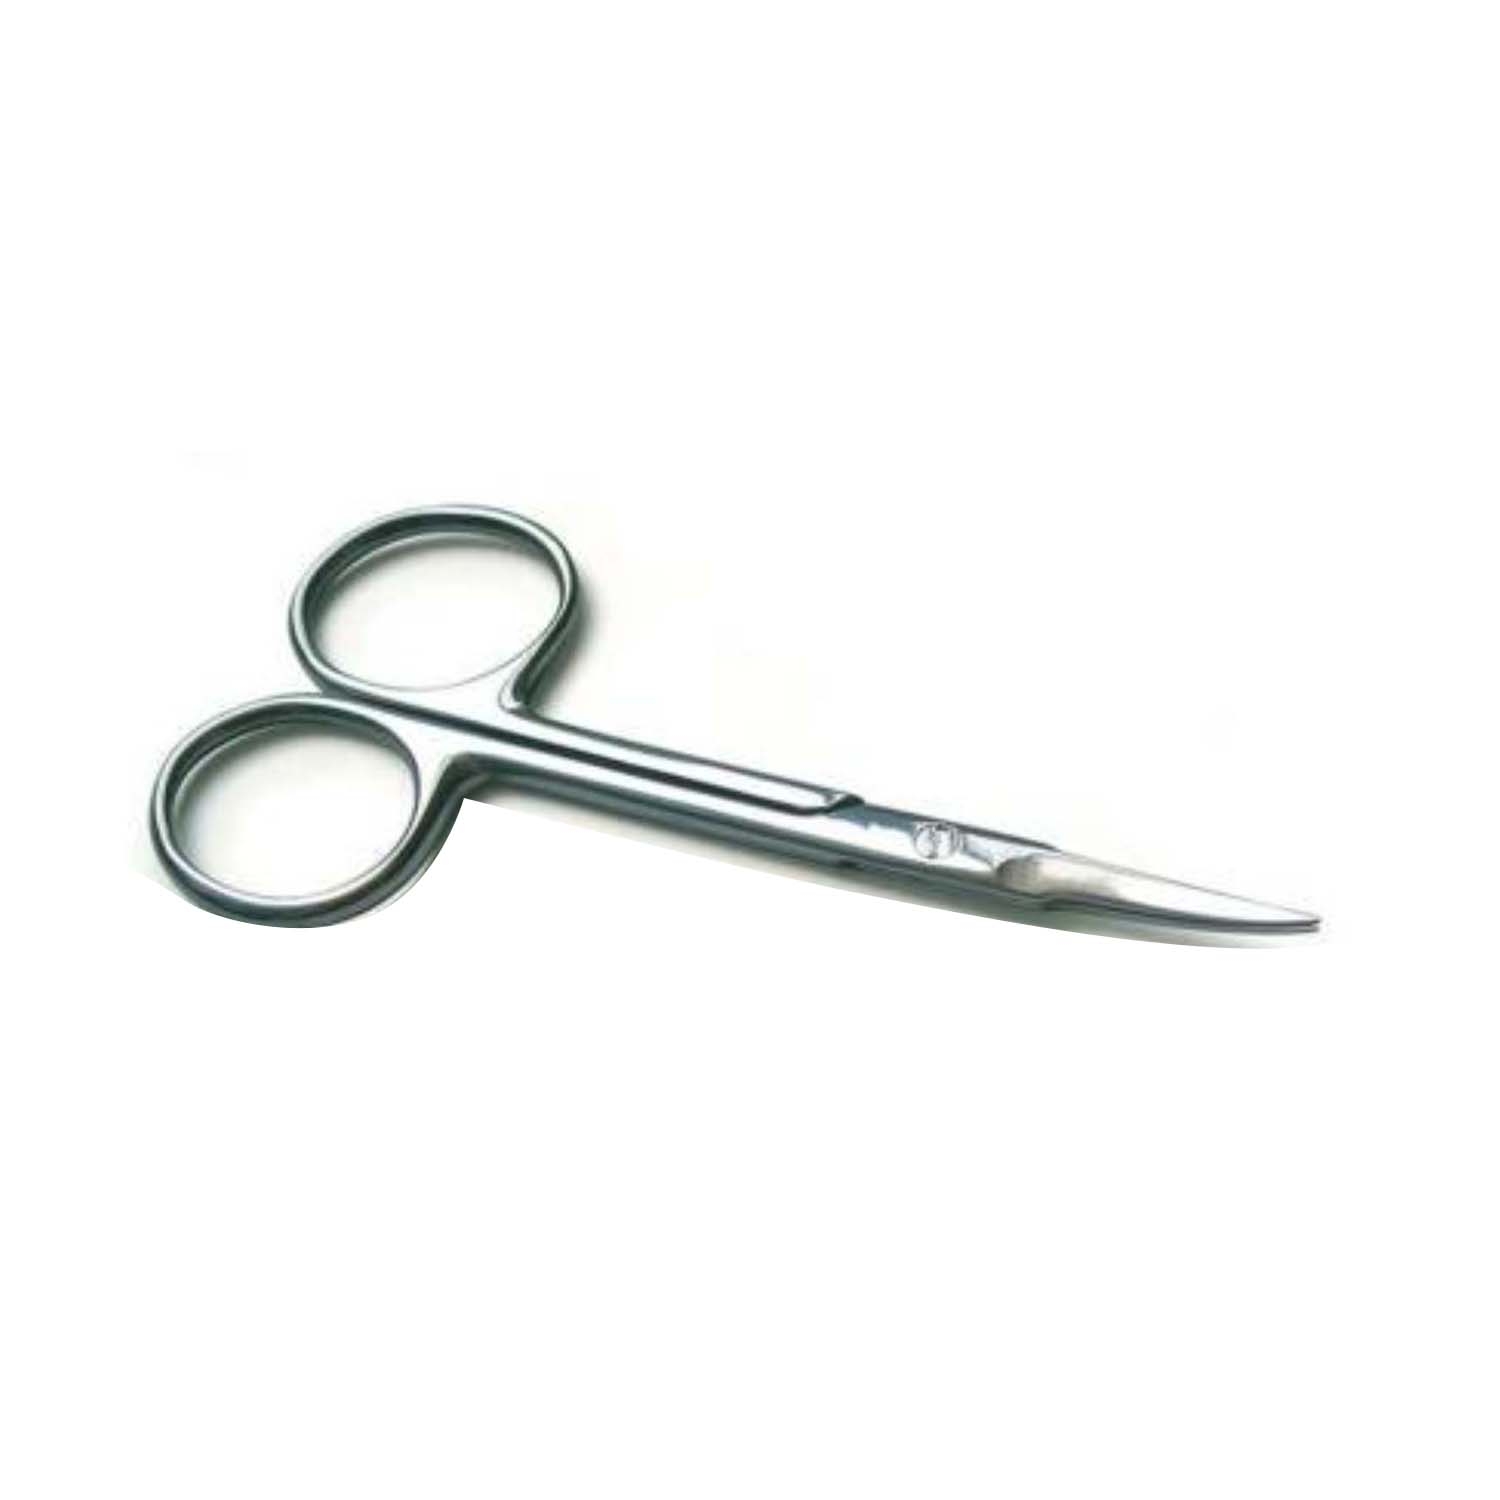 Basicare | Basicare Euro Cuticle Scissor